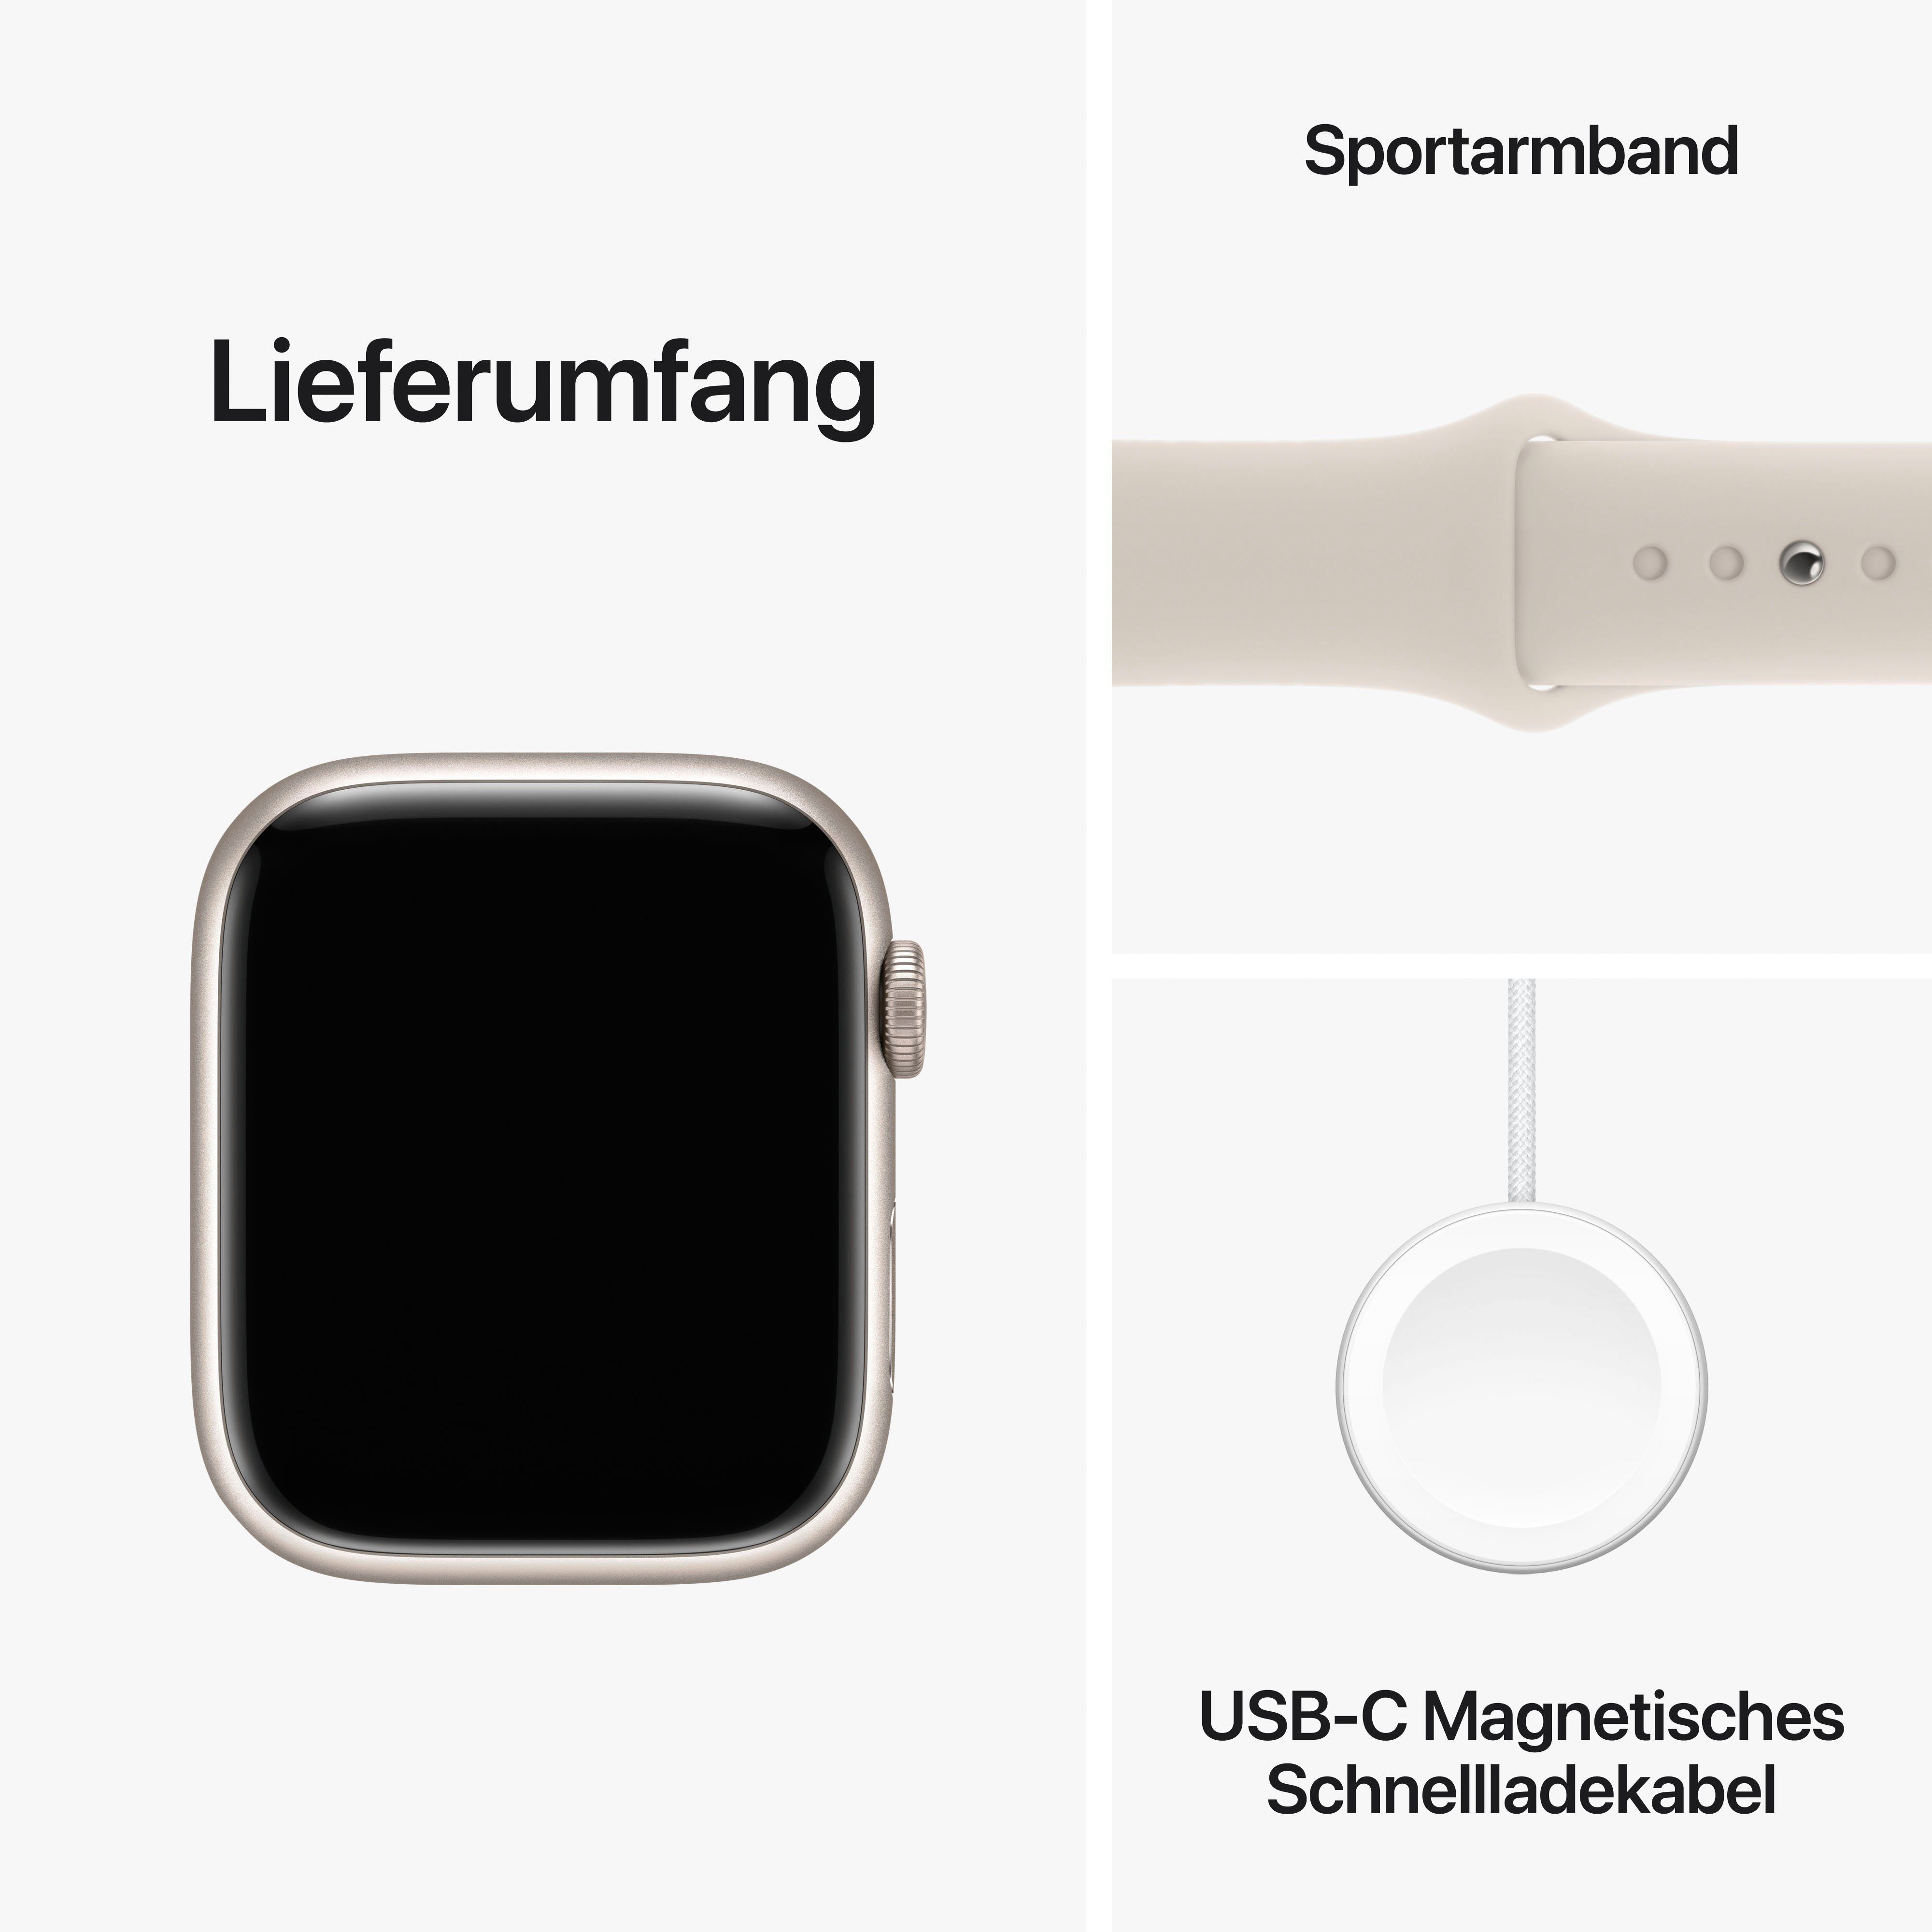 cm/1,77 Polarstern OS (4,5 Zoll, Polarstern 10), Band Series Apple 45mm Aluminium Watch | Smartwatch GPS 9 Watch Sport S/M